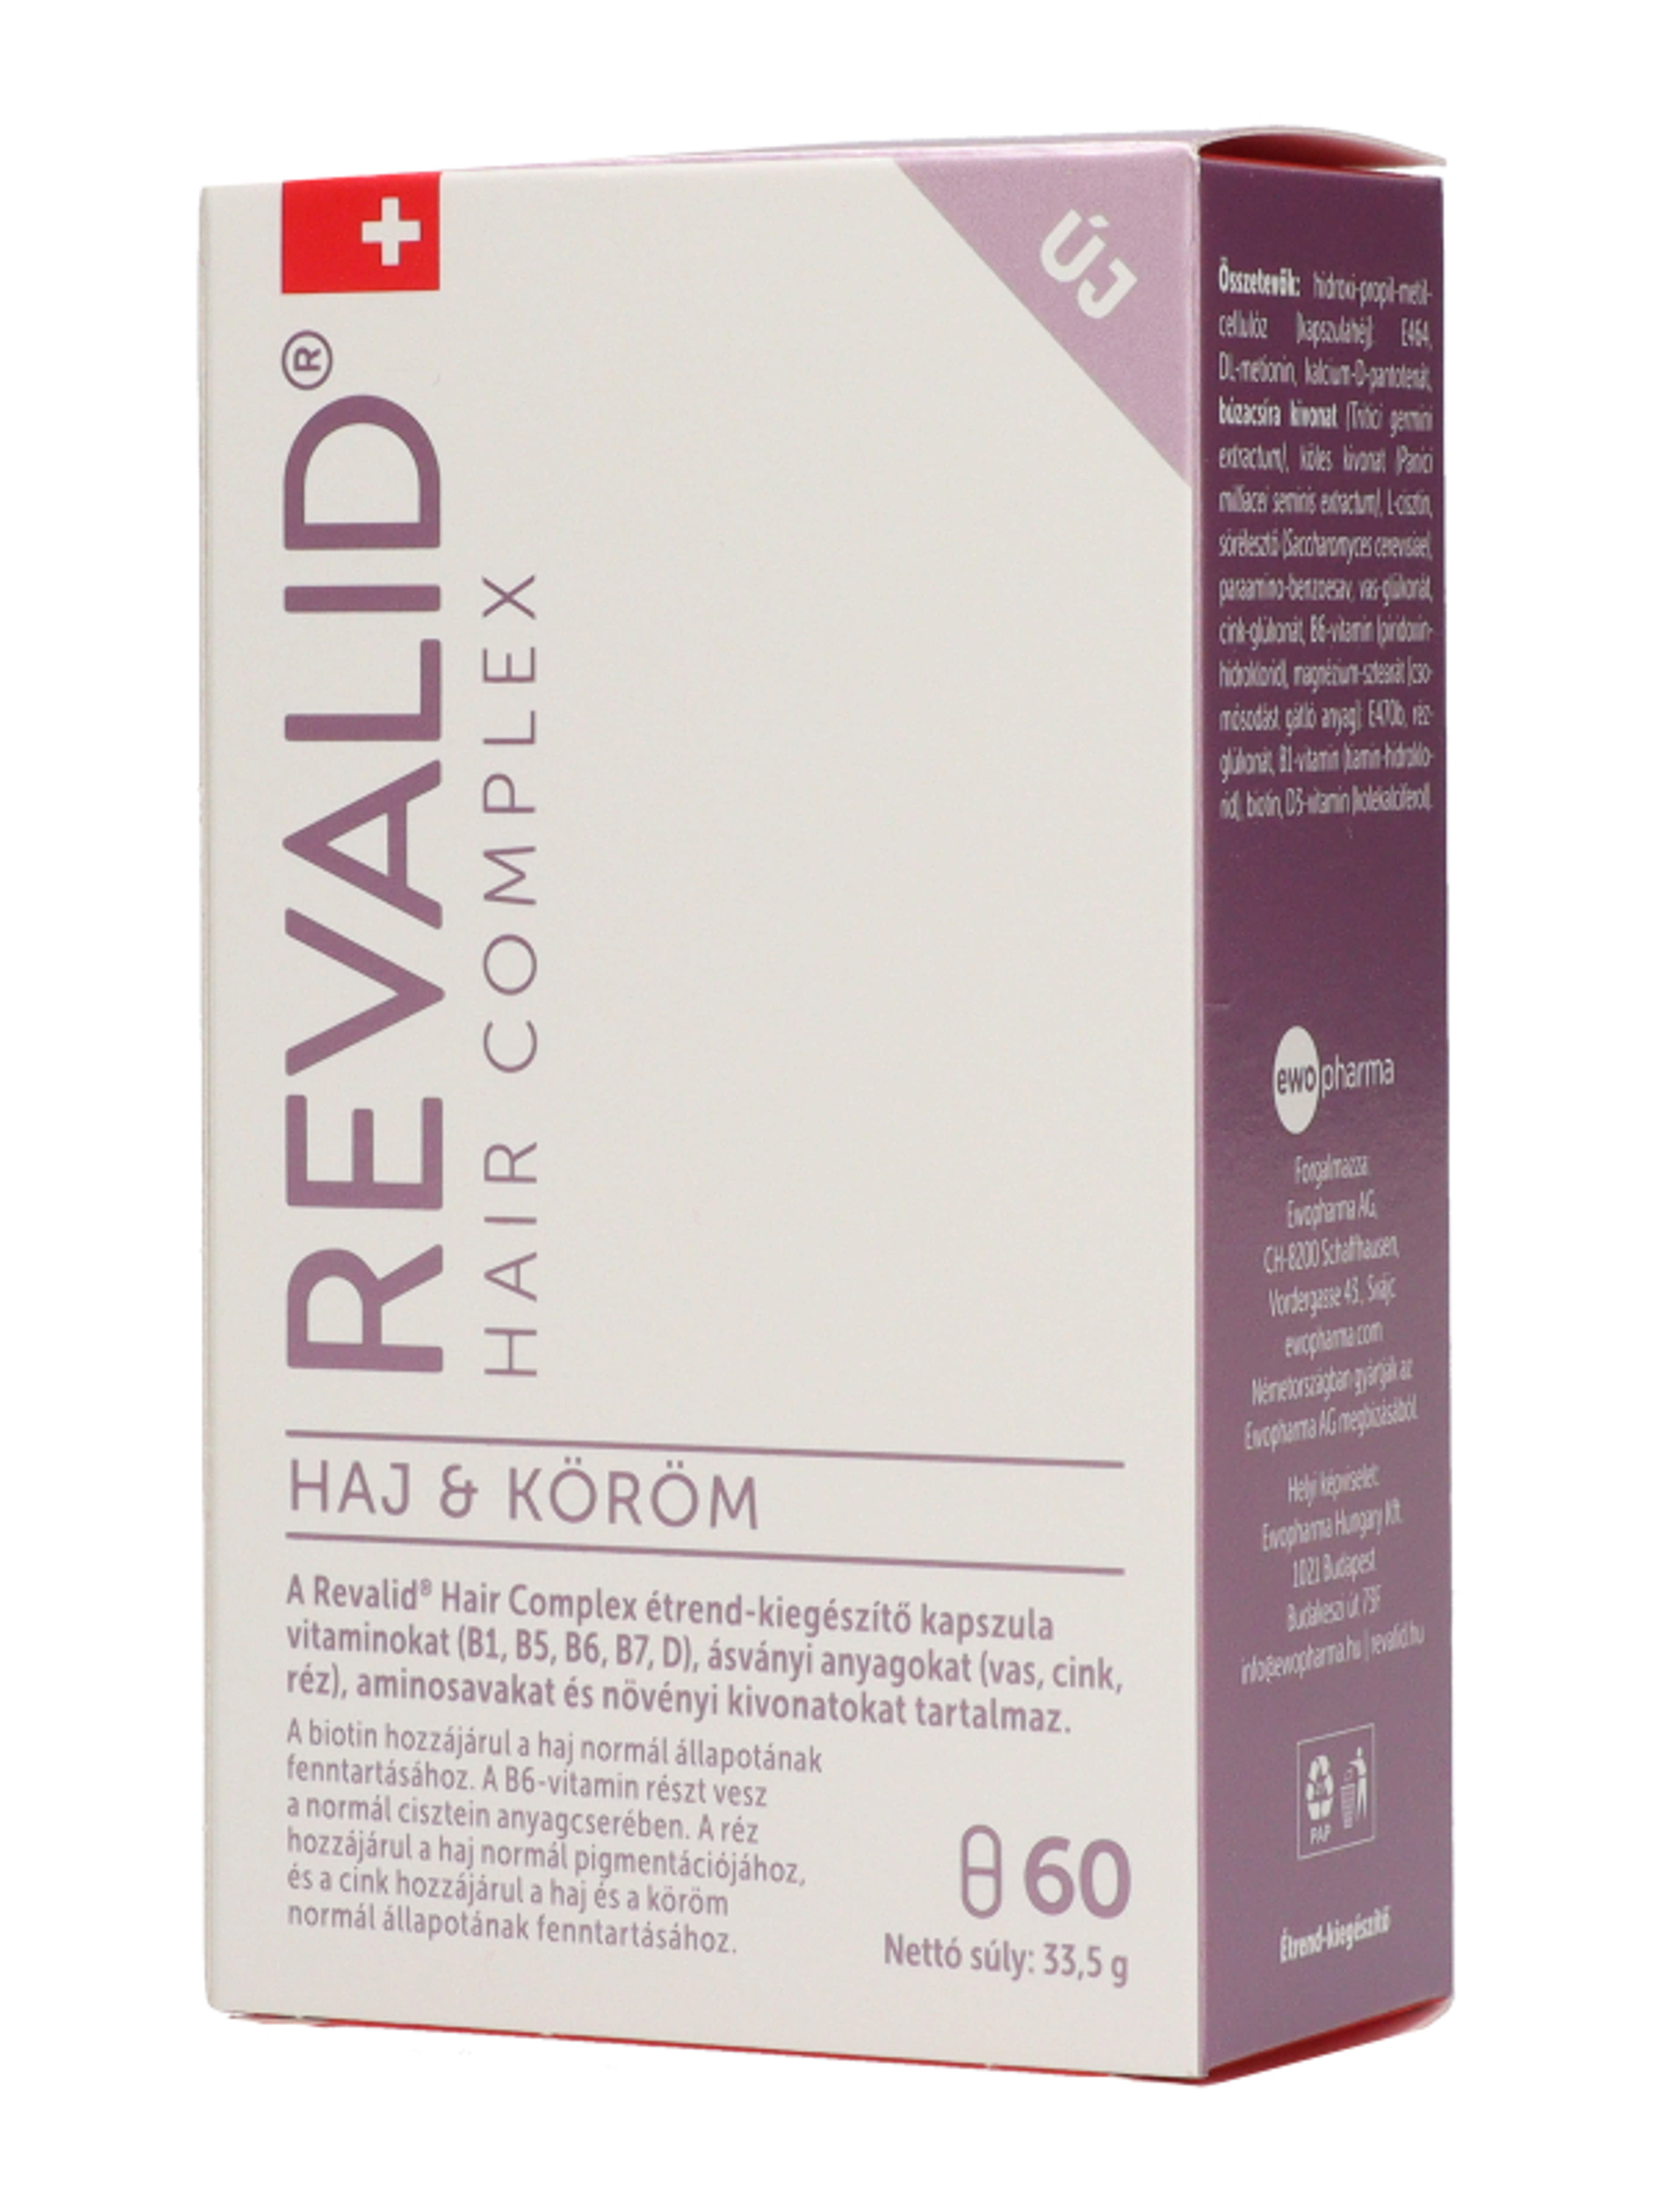 Revalid hair complex étrend-kiegészítő kapszula - 60 db-3